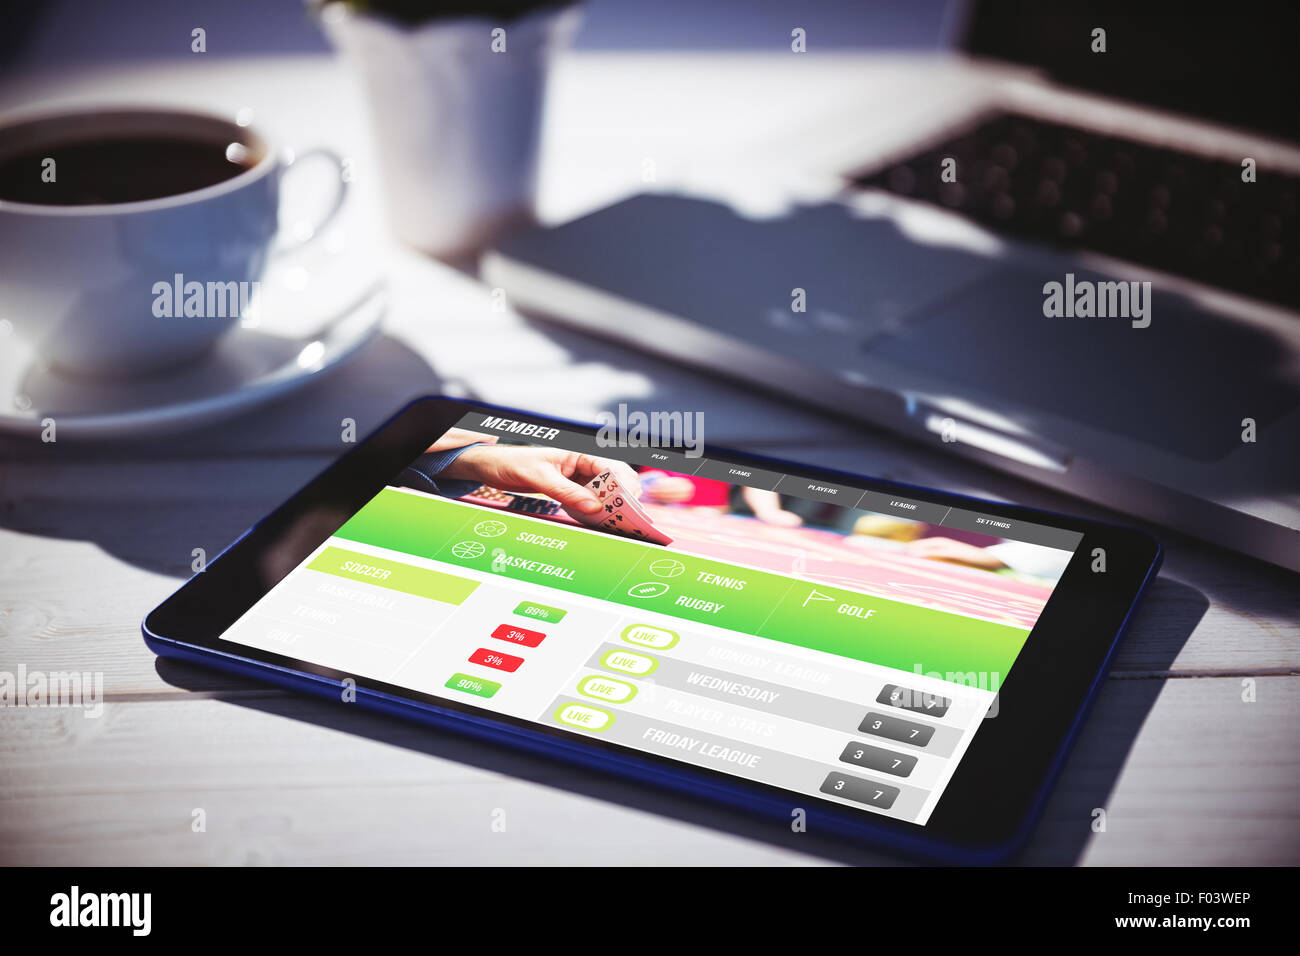 Composite image of gambling app screen Stock Photo